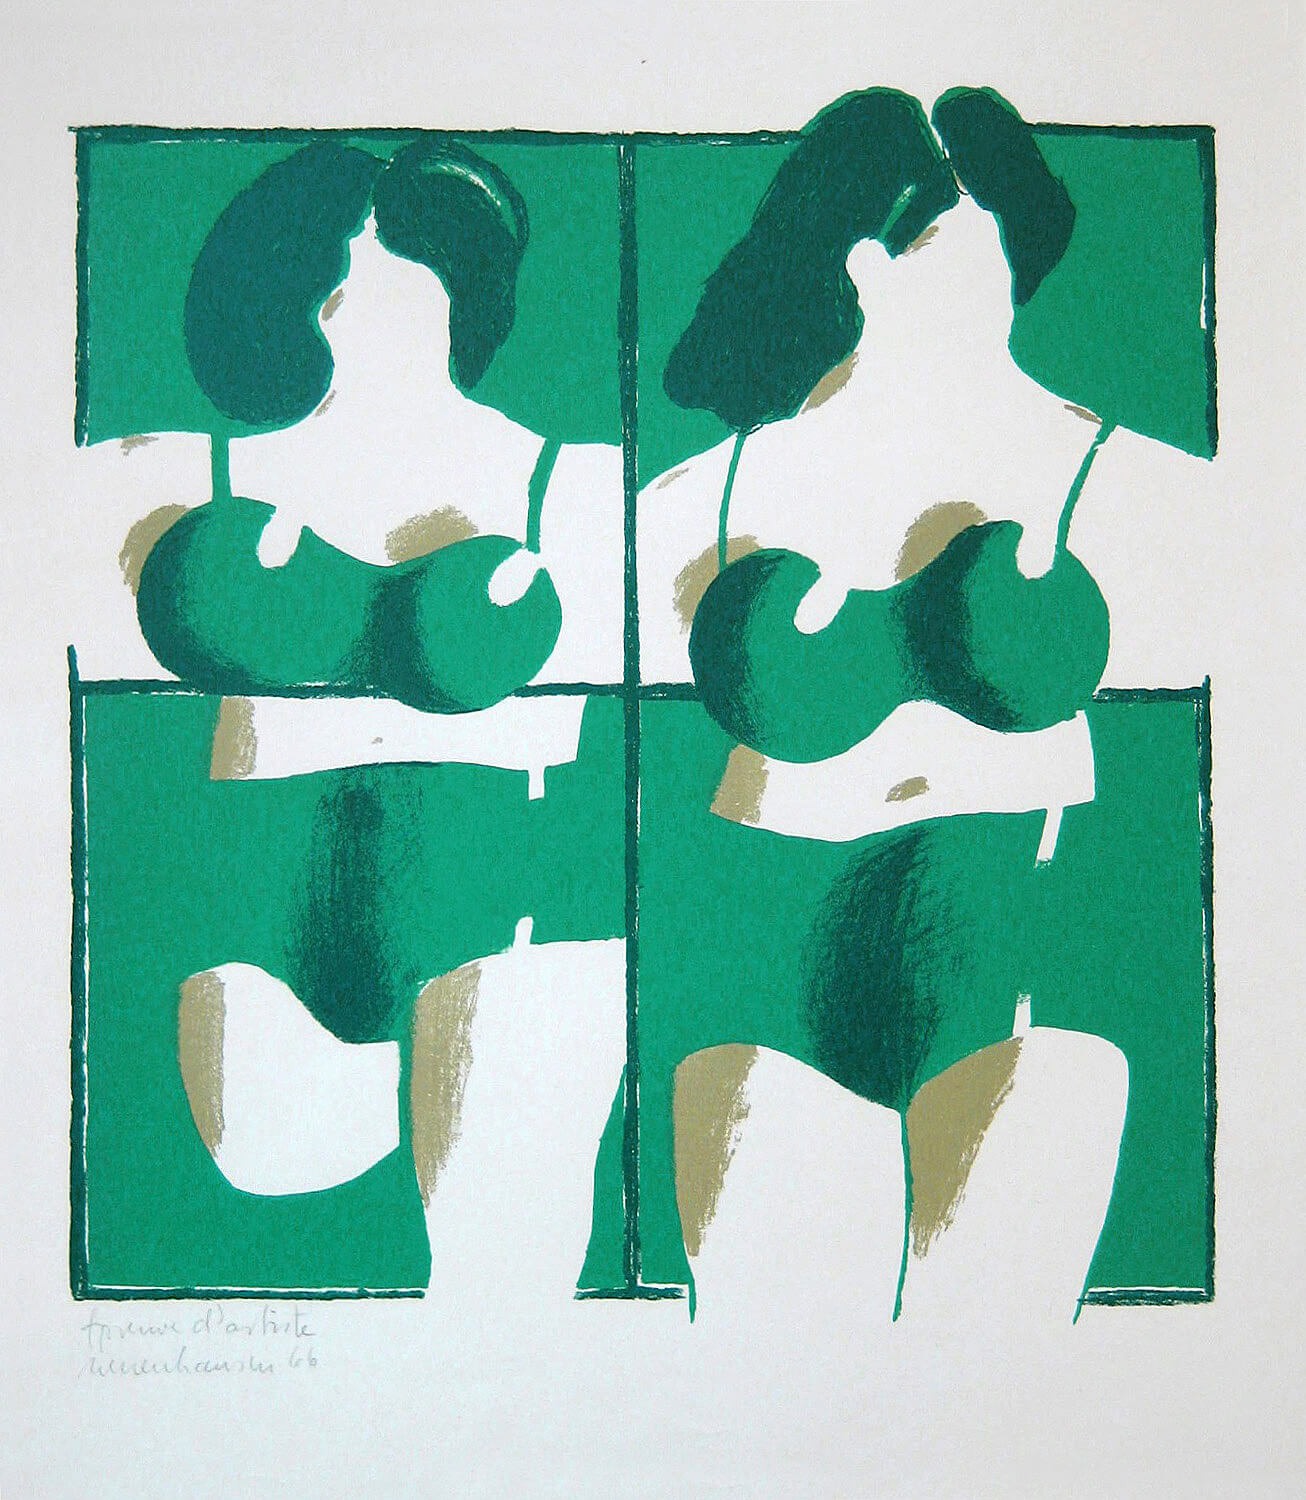 Siegfried Neuenhausen, Zwei Badende, 1966, Lithographie, e. a., 45,7 x 55,8 cm